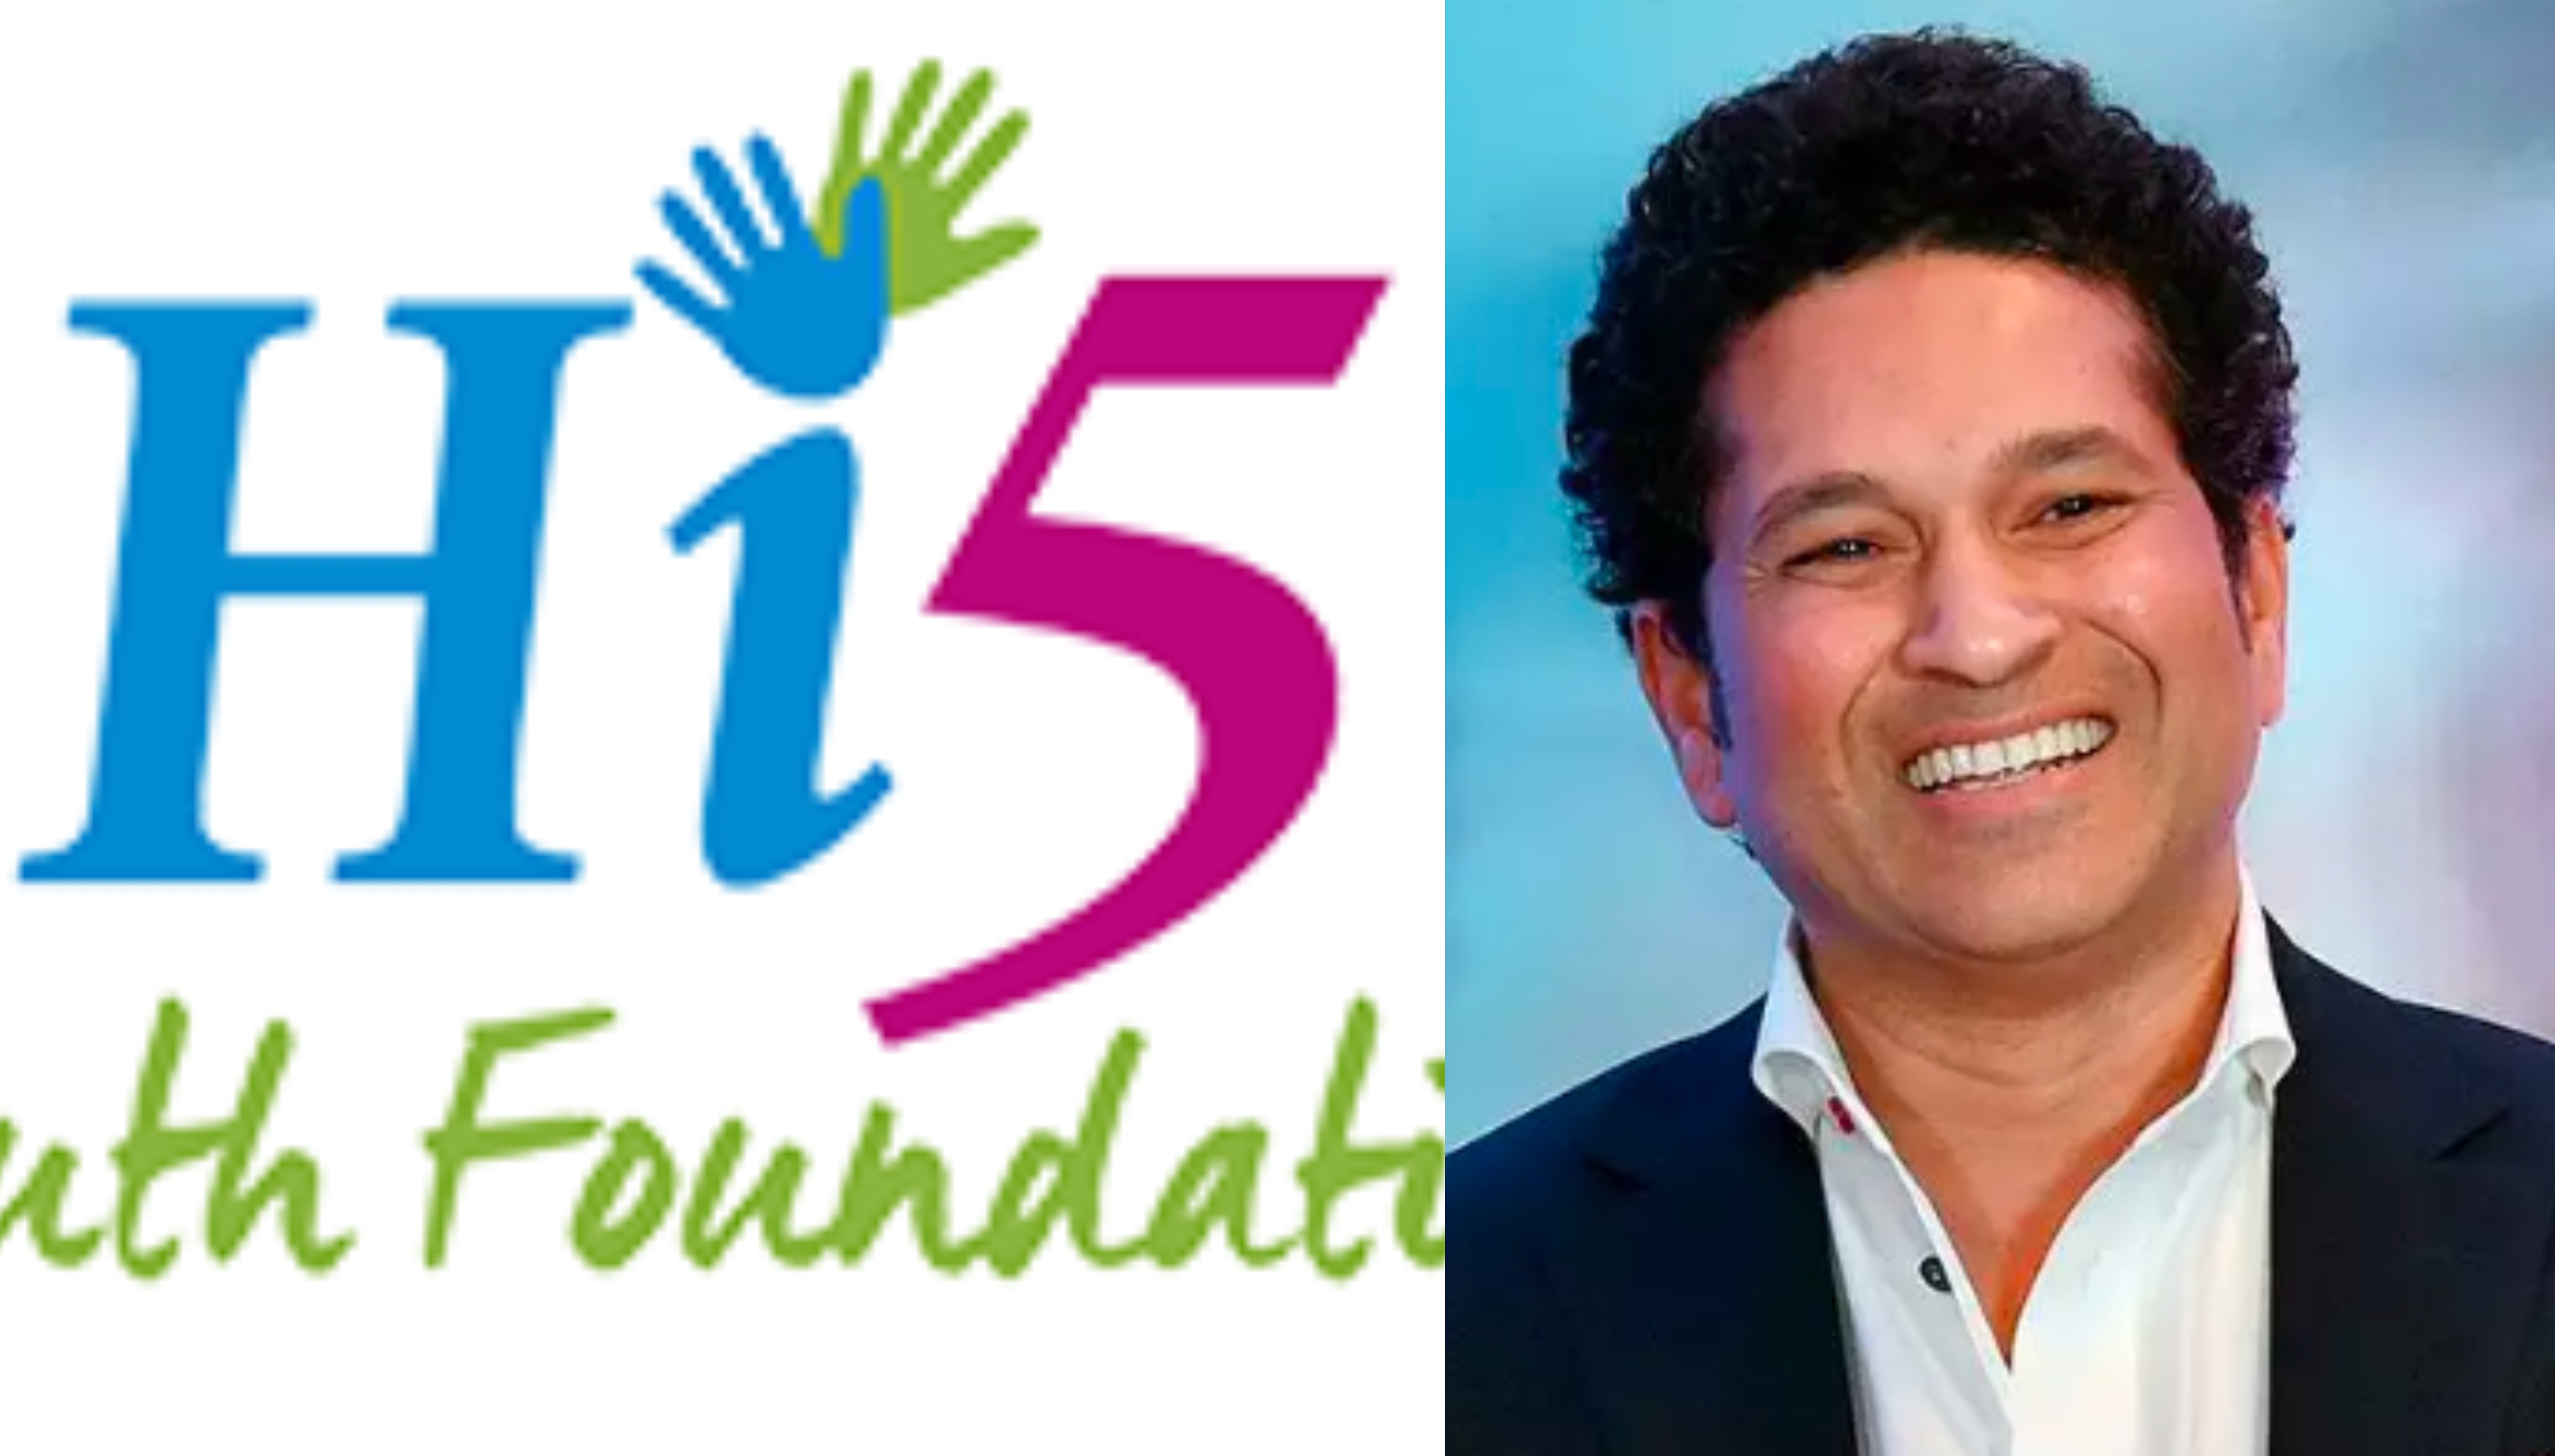 Tendulkar made the donation to the Hi5 Foundation | AFP